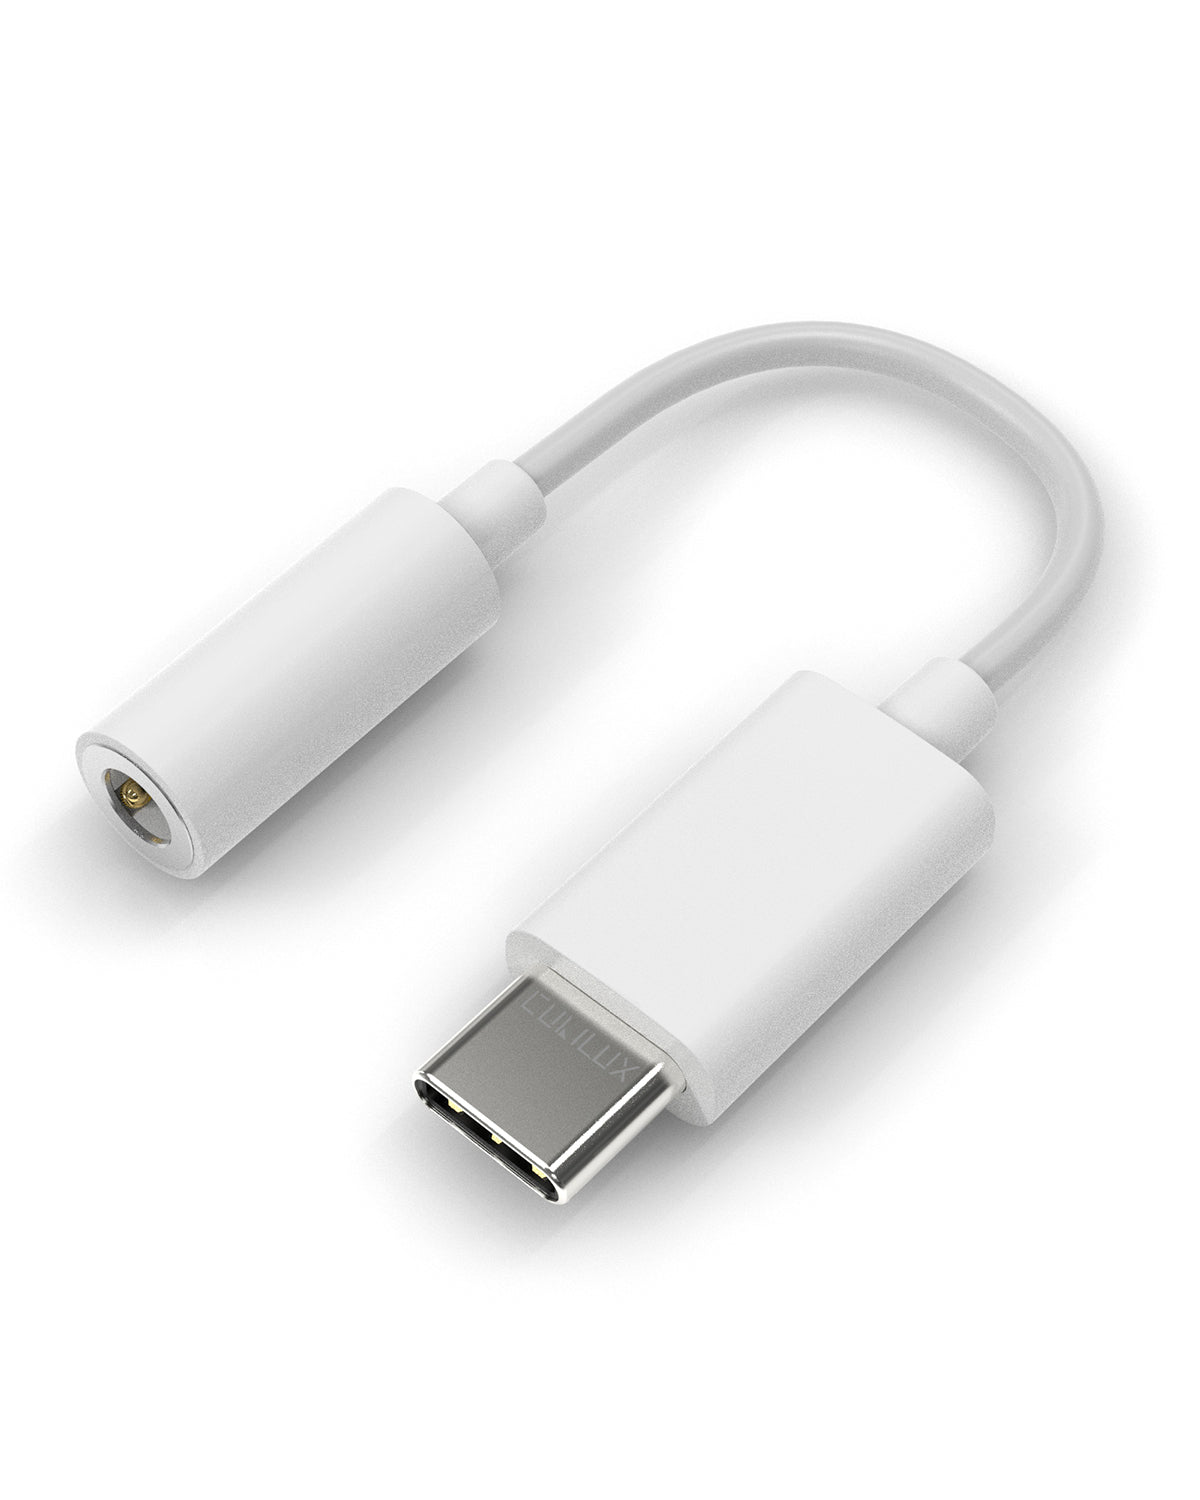 USB C Headphone Adapter-1 Pack